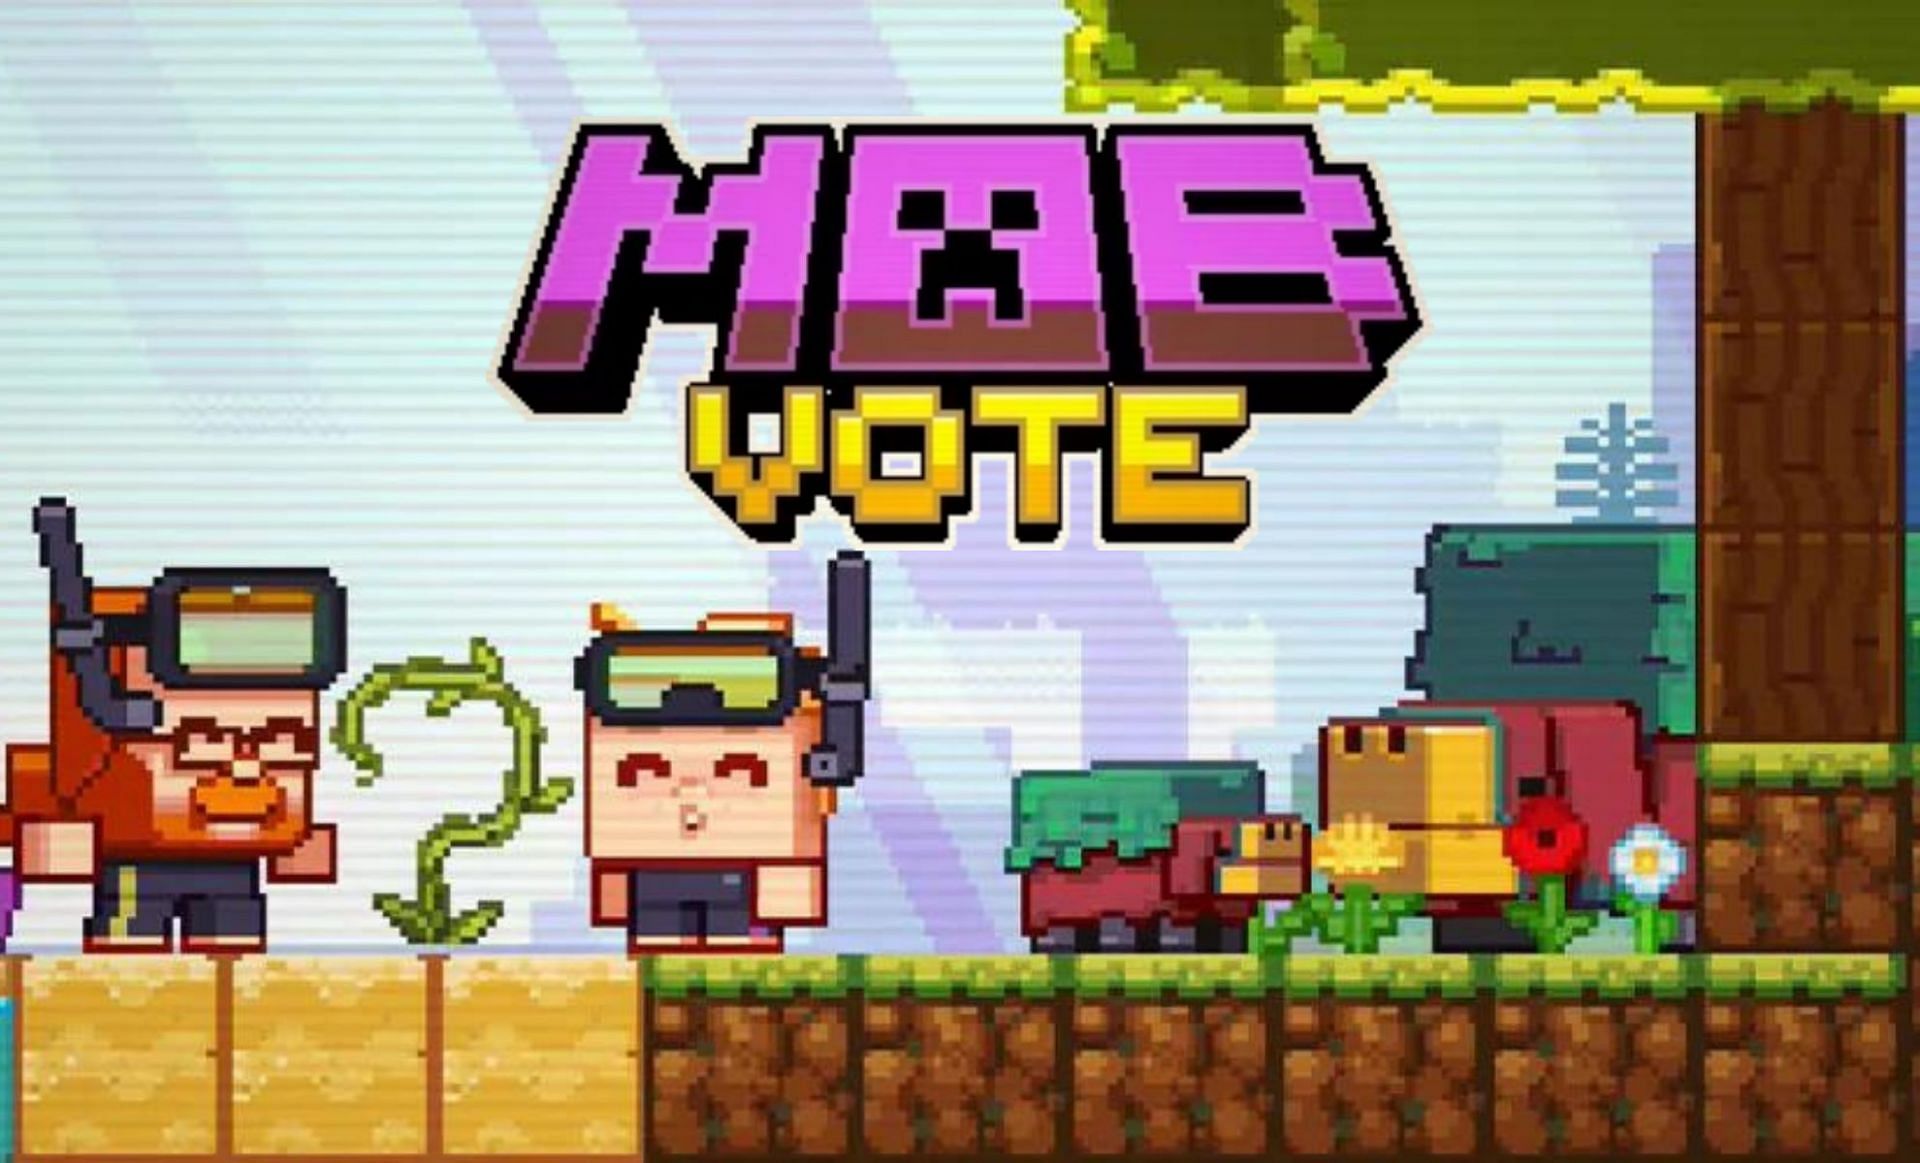 Cara memilih Sniffer, Rascal, dan Tuff Golem di Minecraft Mob Vote 2022